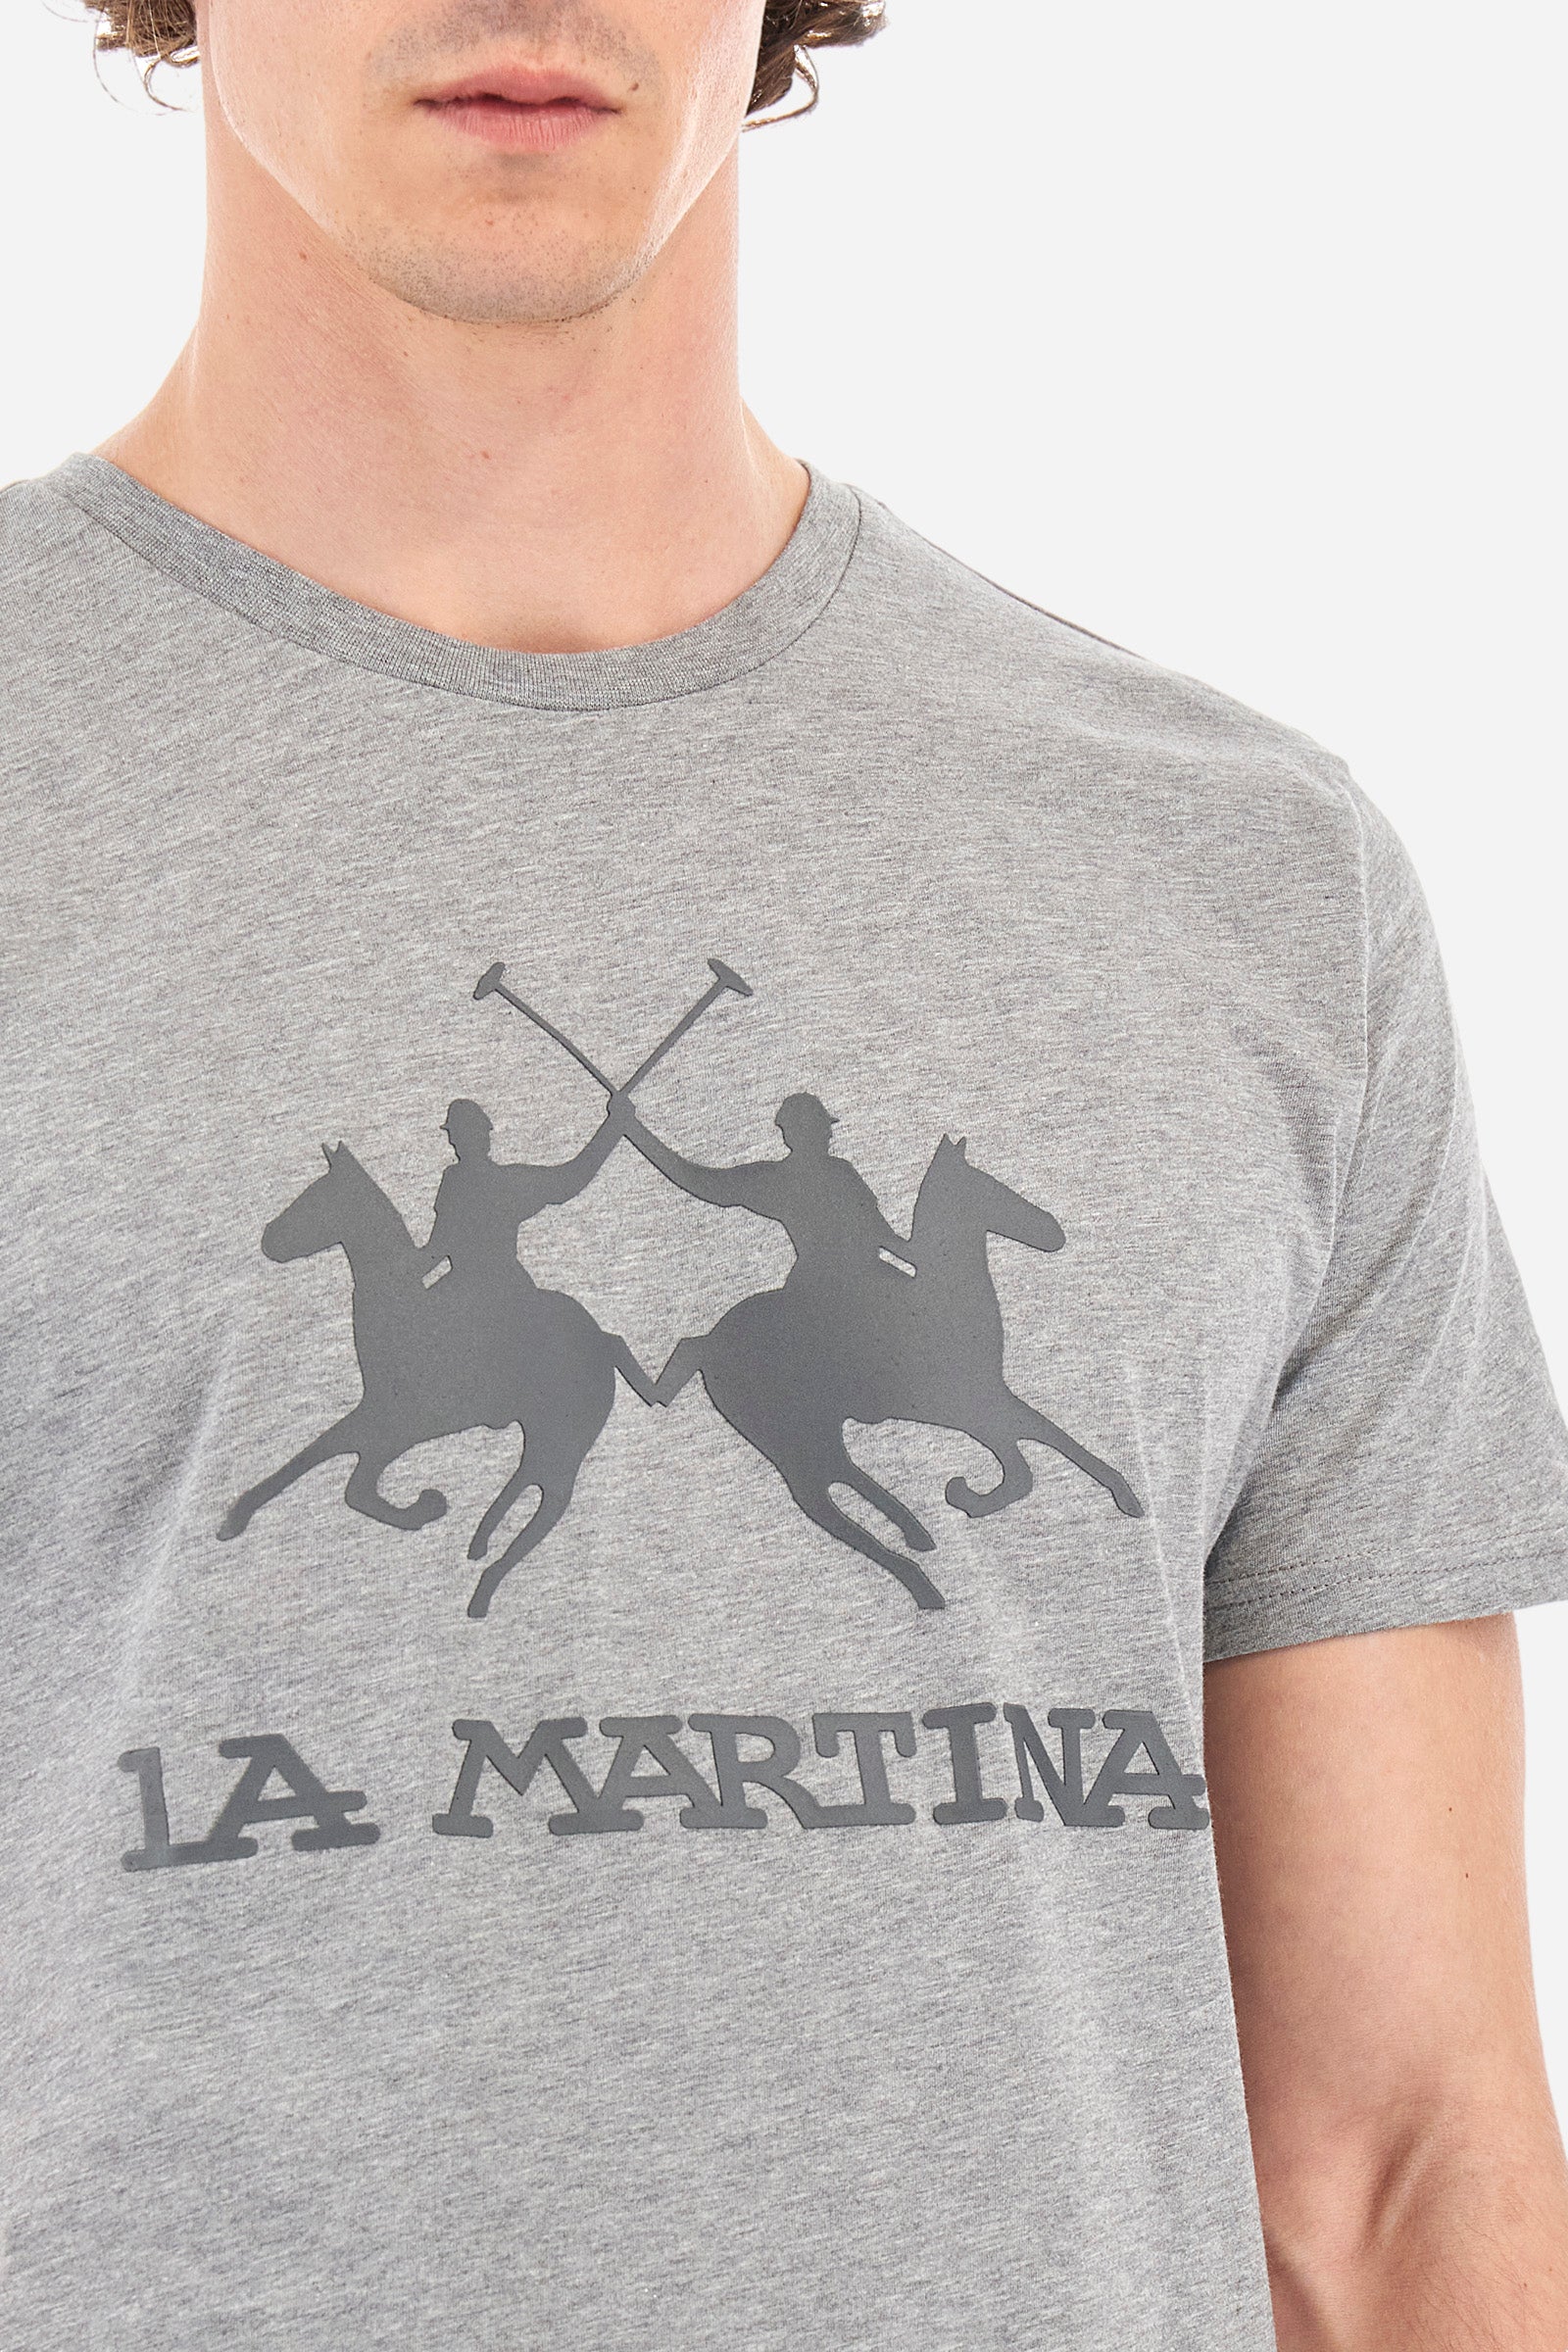 Men's T-shirts in a regular fit - Moreno